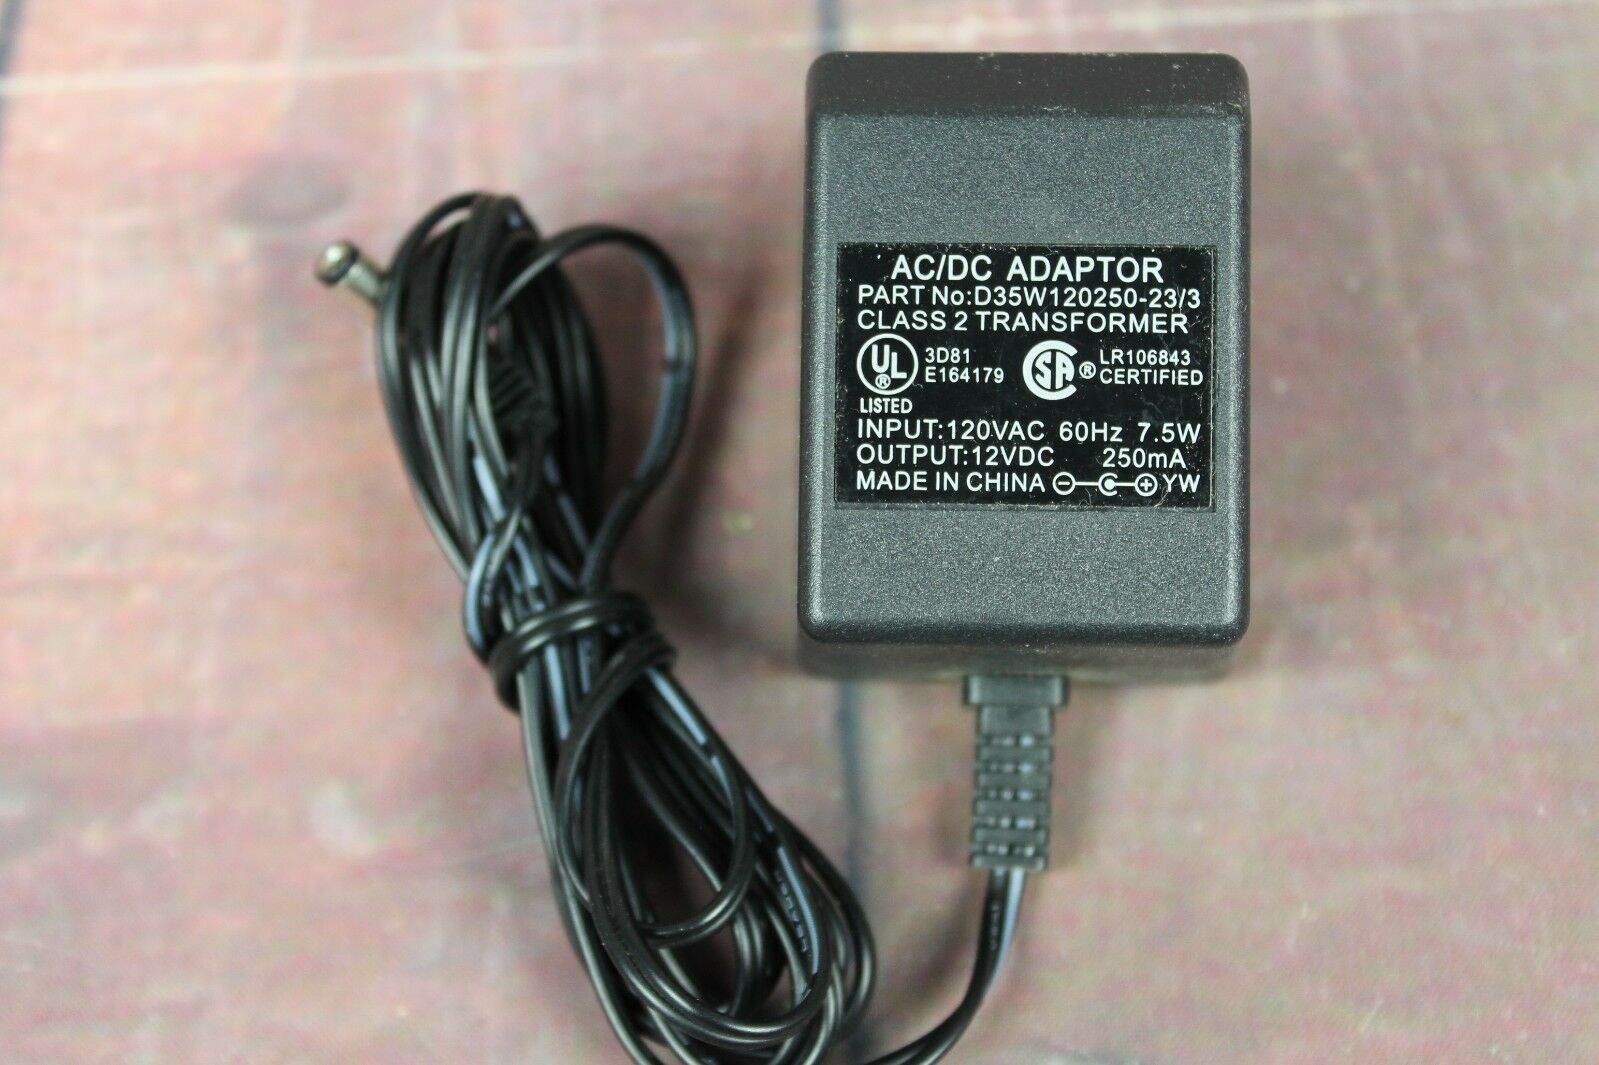 NEW AC DC Adaptor D35W120250-23/3 Class 2 Transformer 12VDC 250mA Power supply